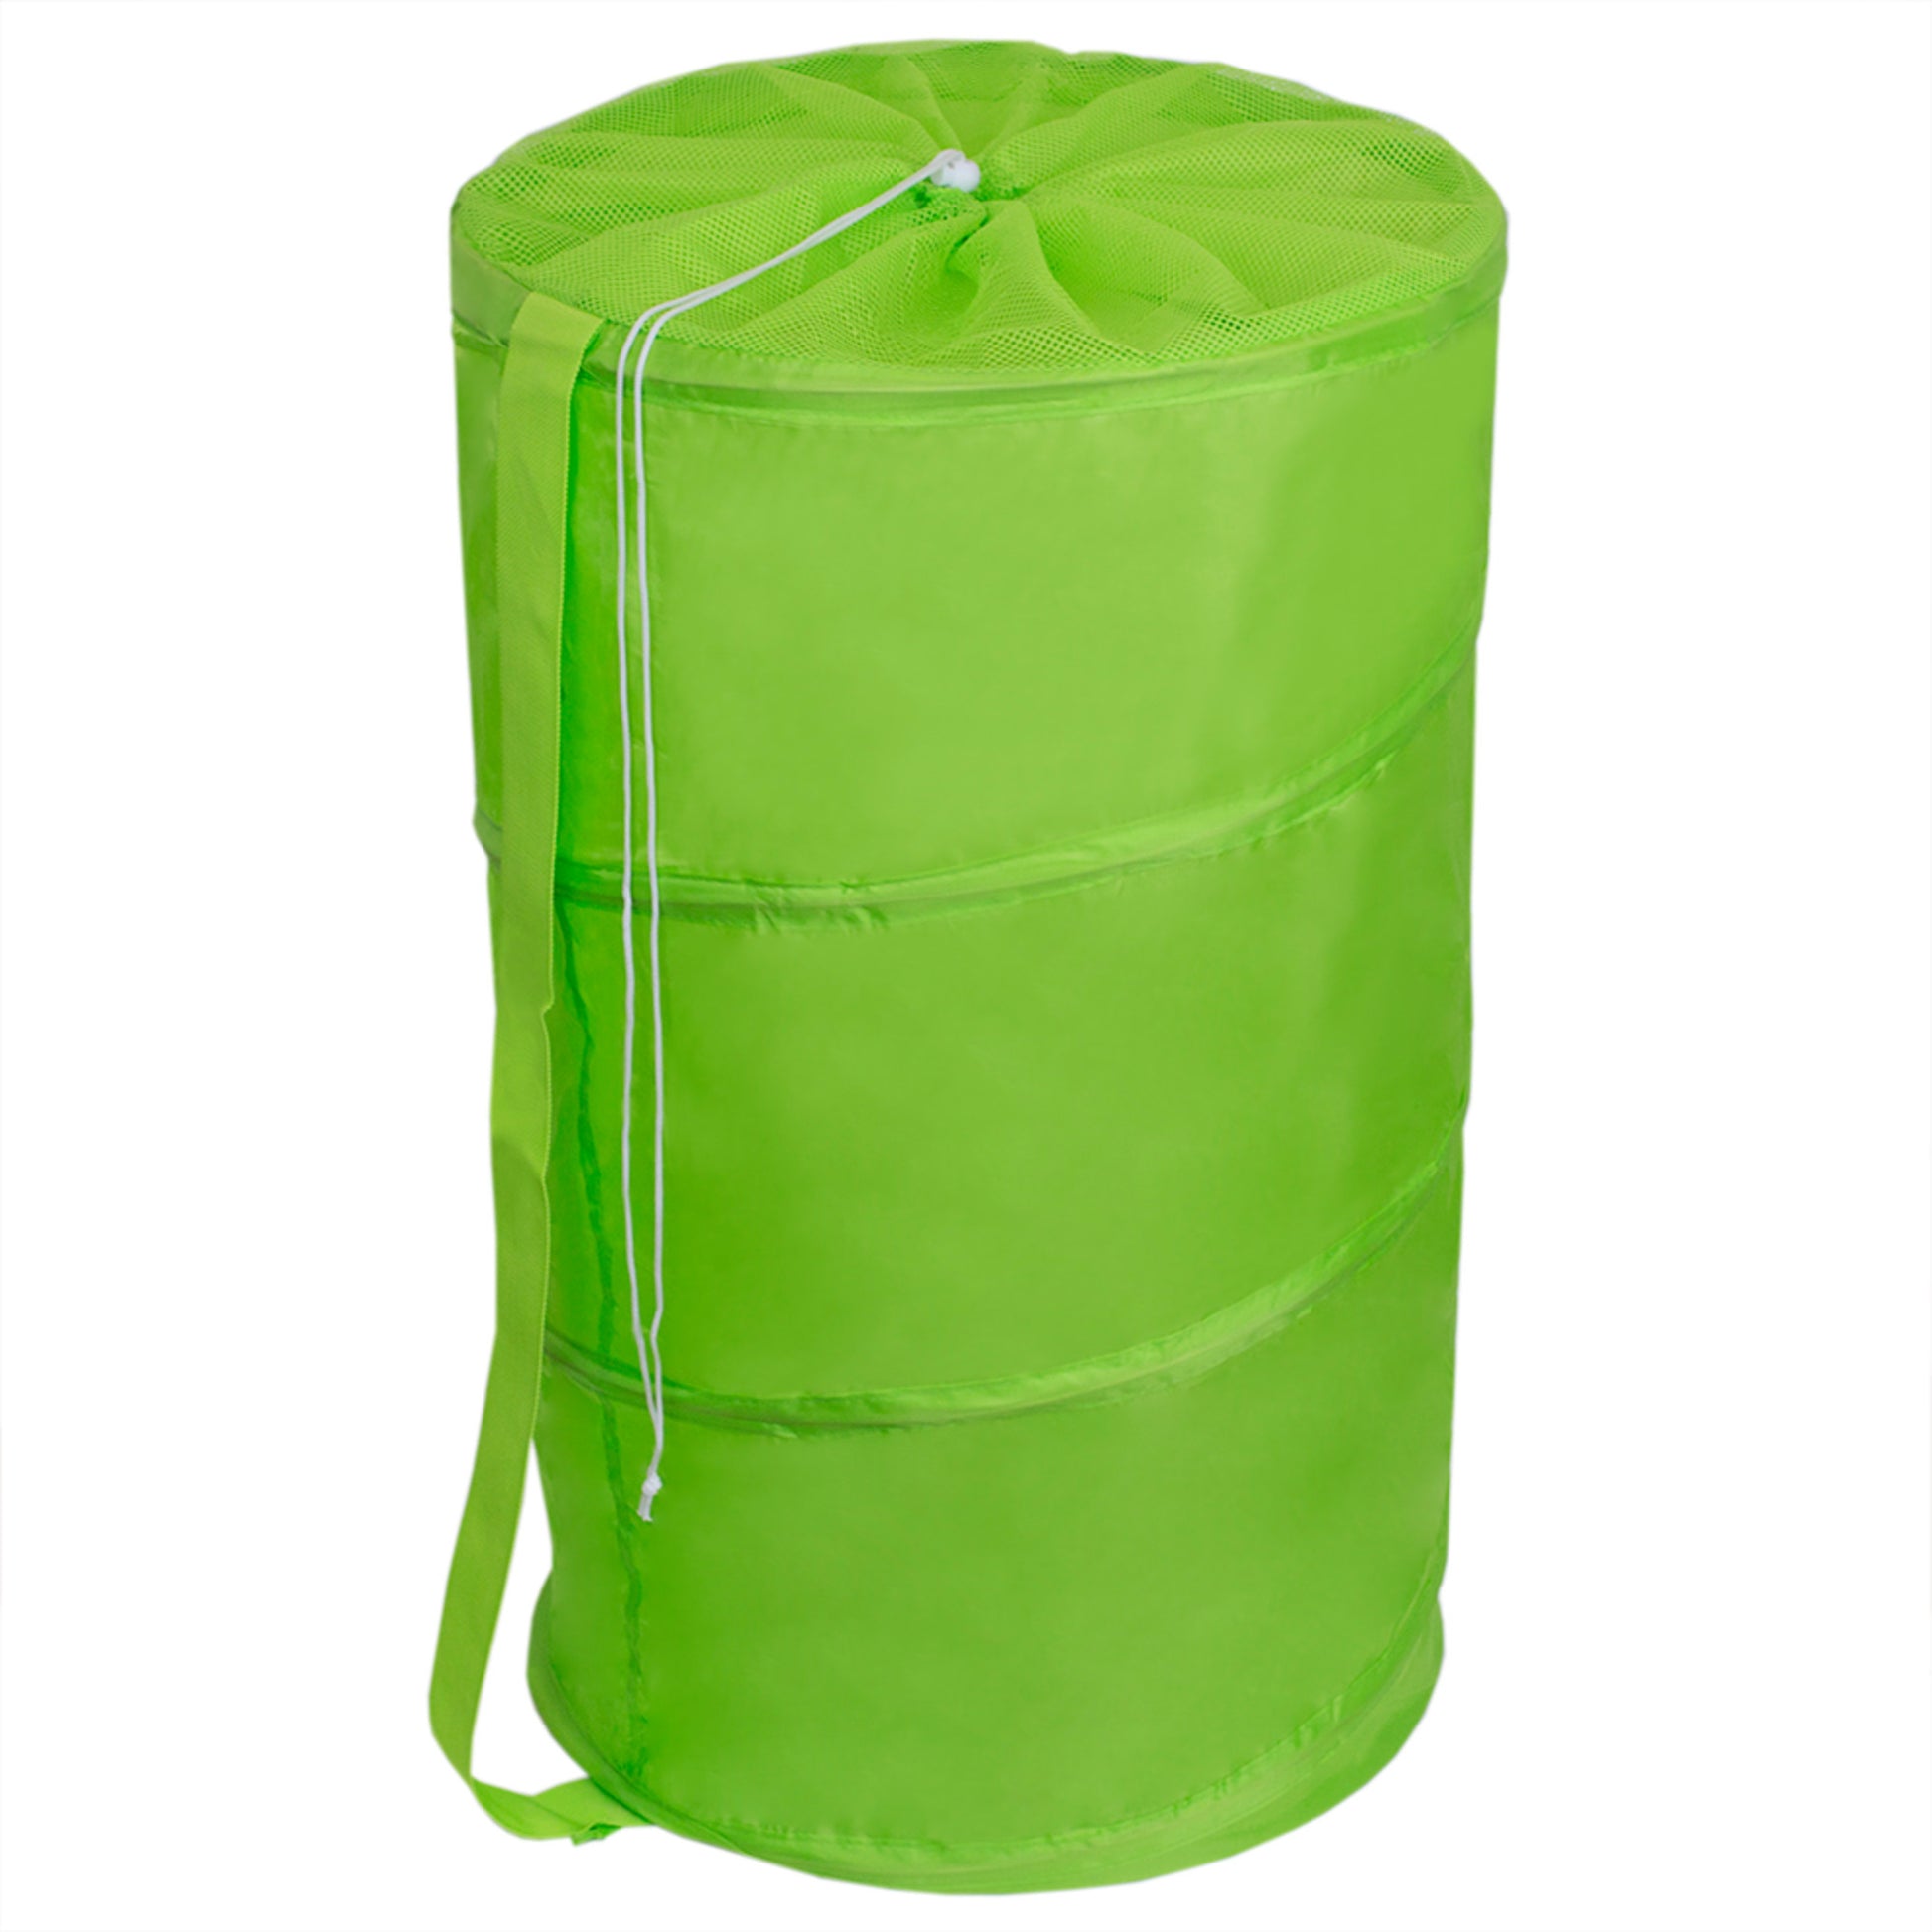 Home Basics Barrel Laundry Hamper, Green - Green